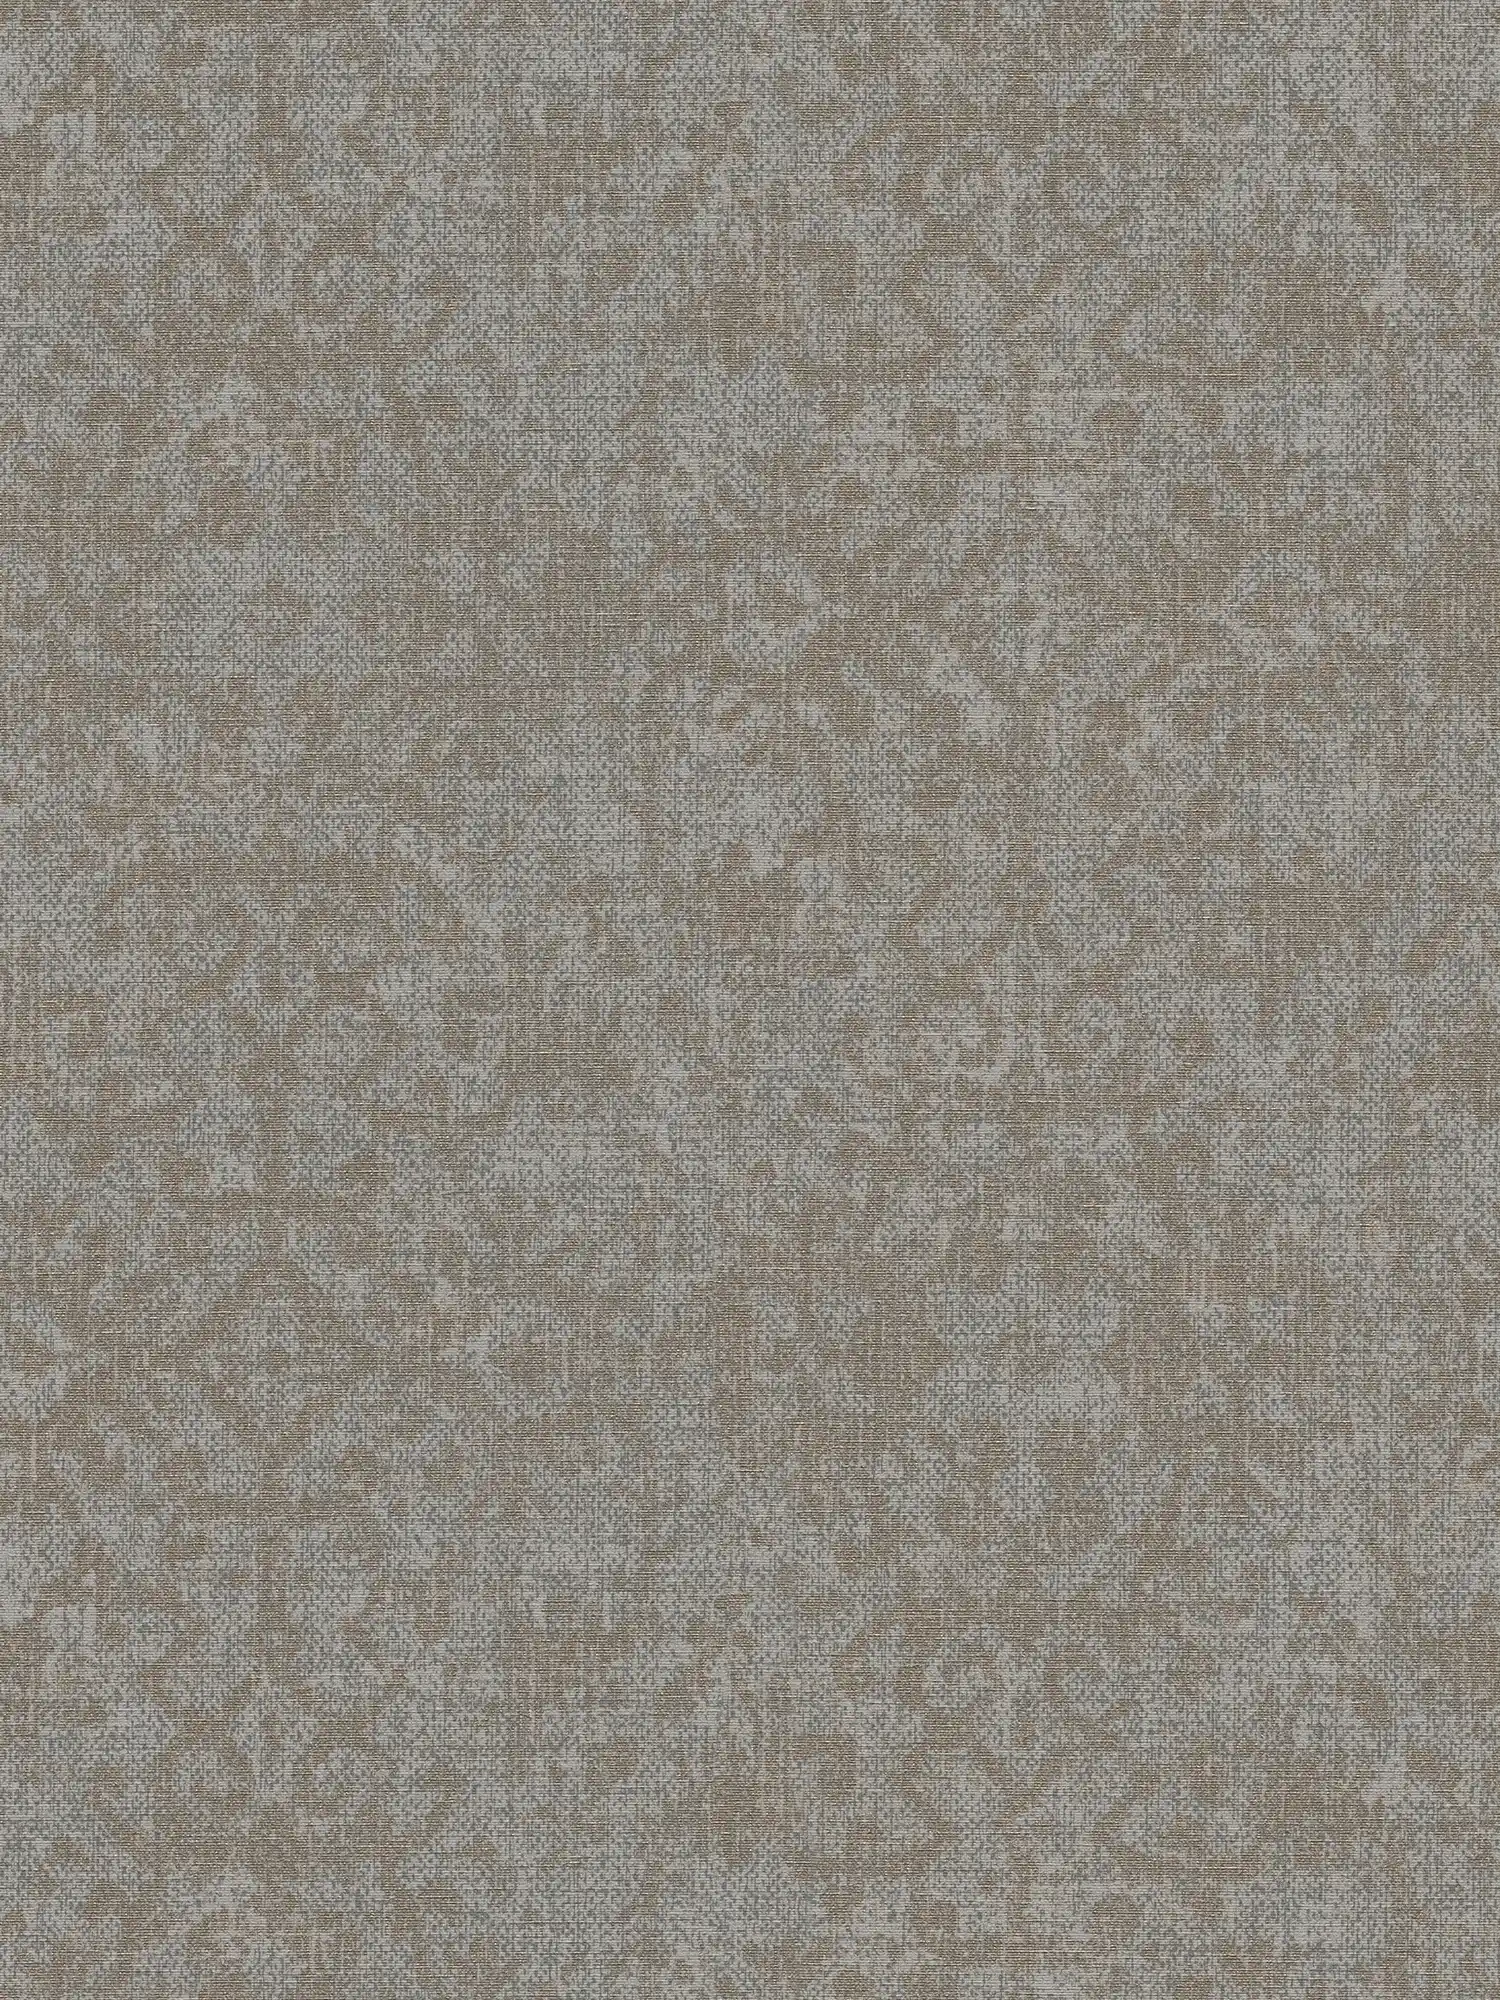         Ethno wallpaper grey-brown with brocade textile look
    